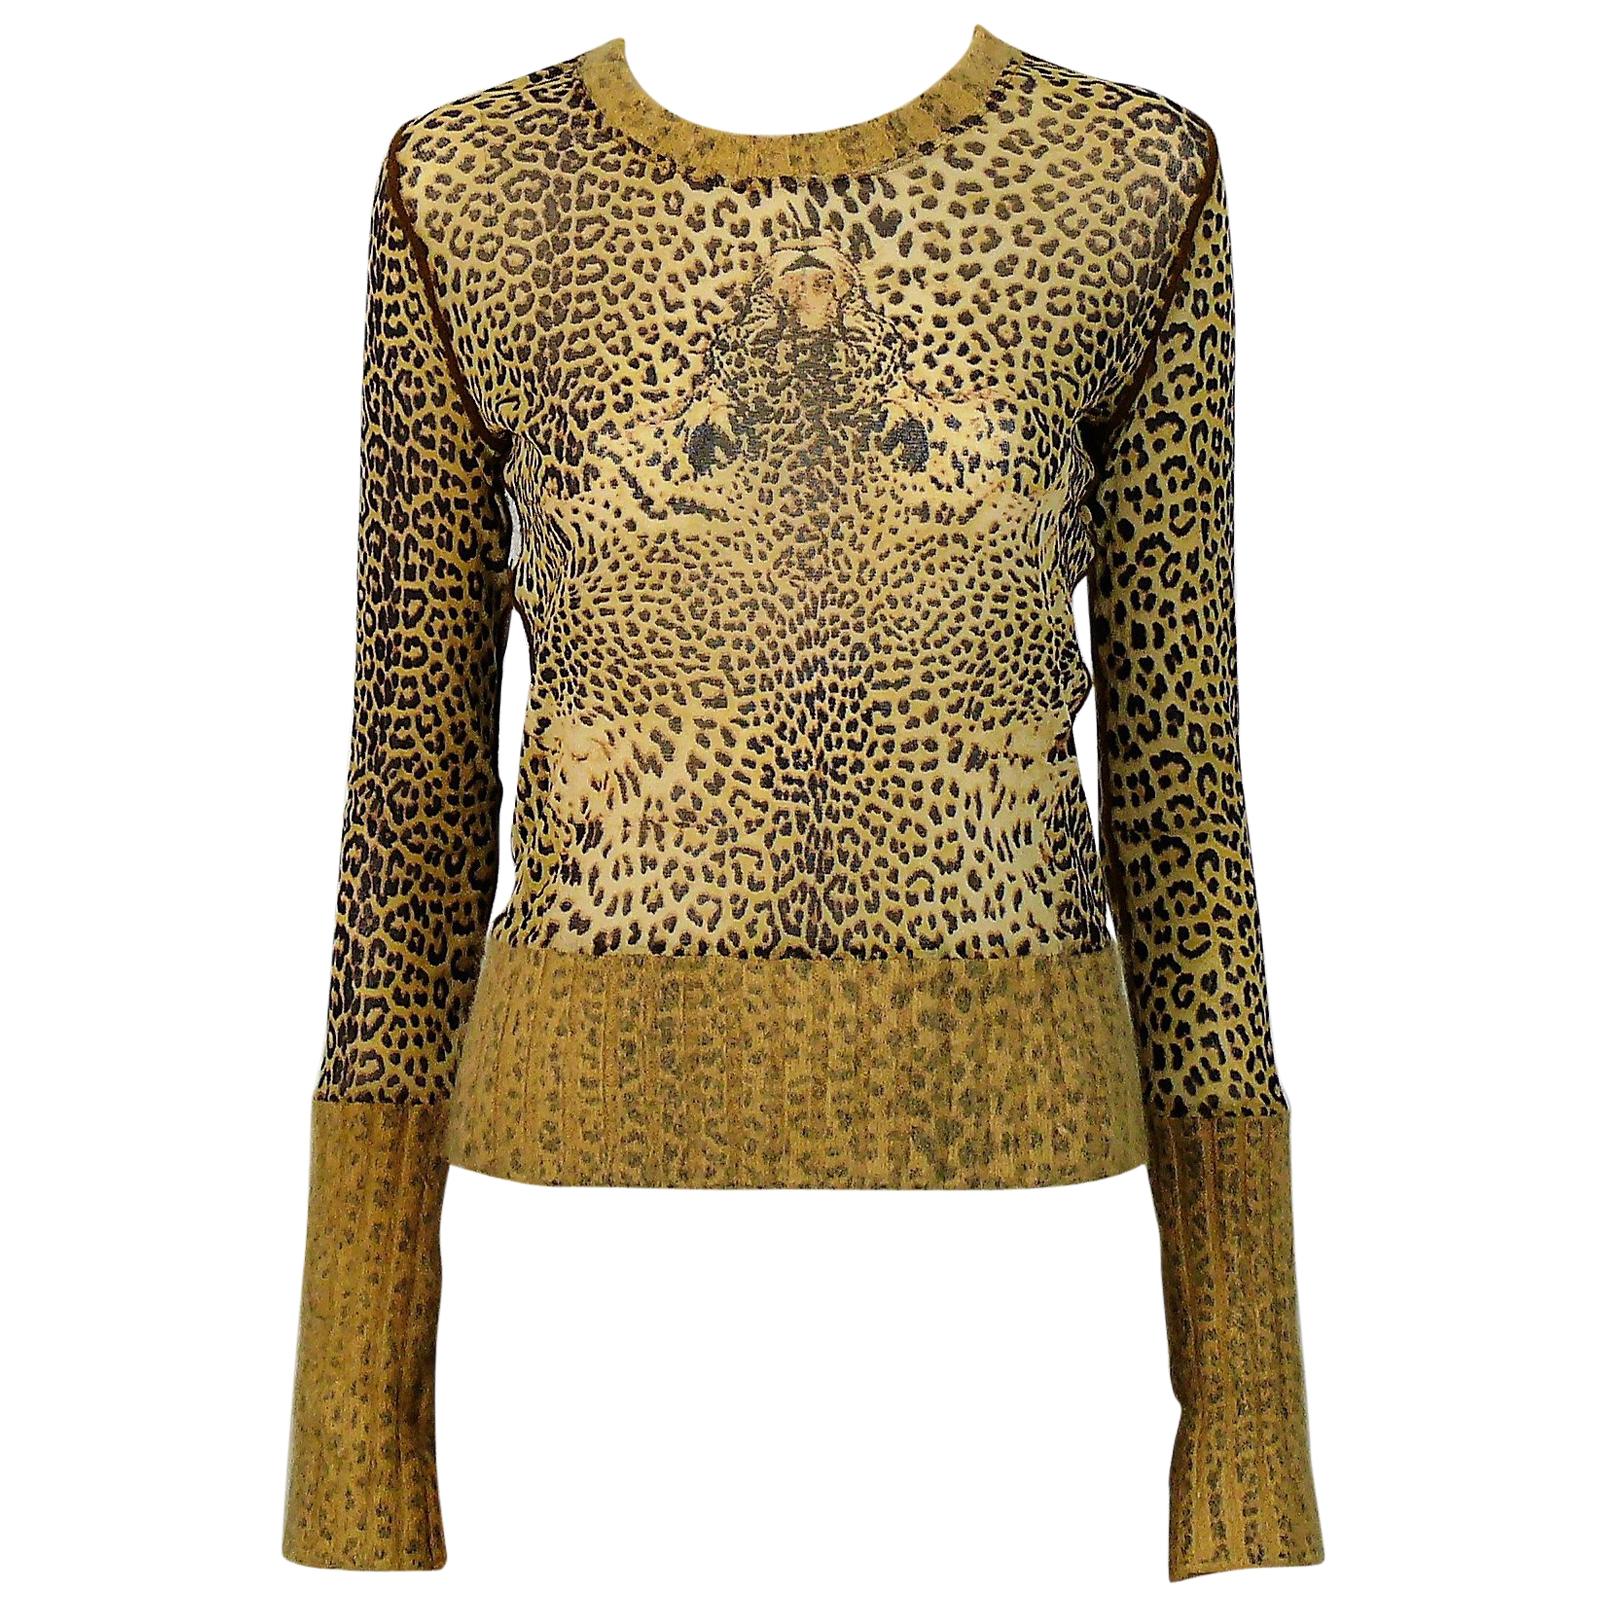 Jean Paul Gaultier Cheetah Print Long Sleeve Top with Angora Trim Size L